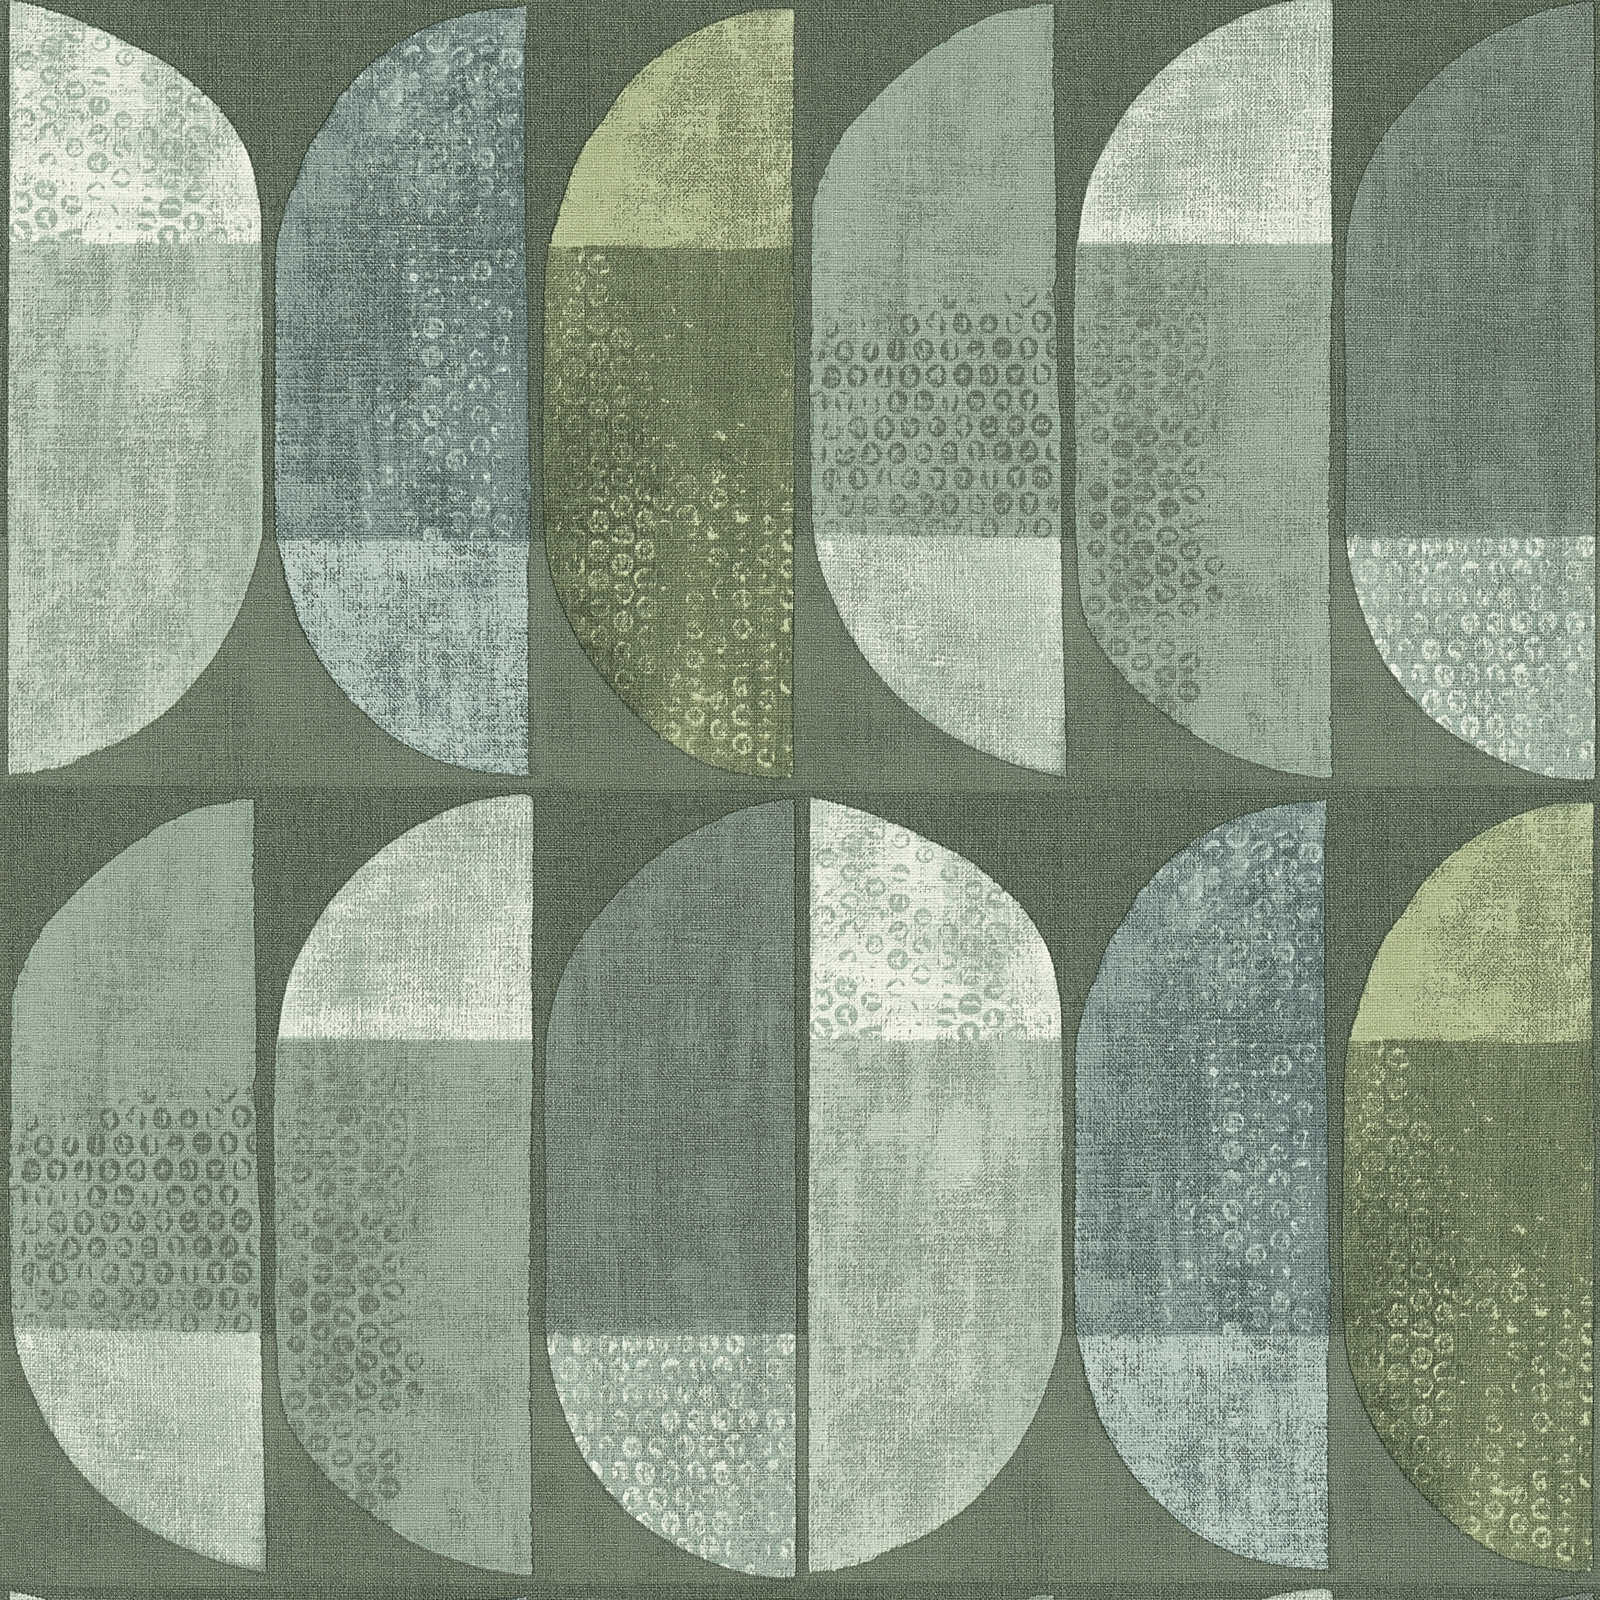         Wallpaper geometric retro pattern, Scandinavian style - green
    